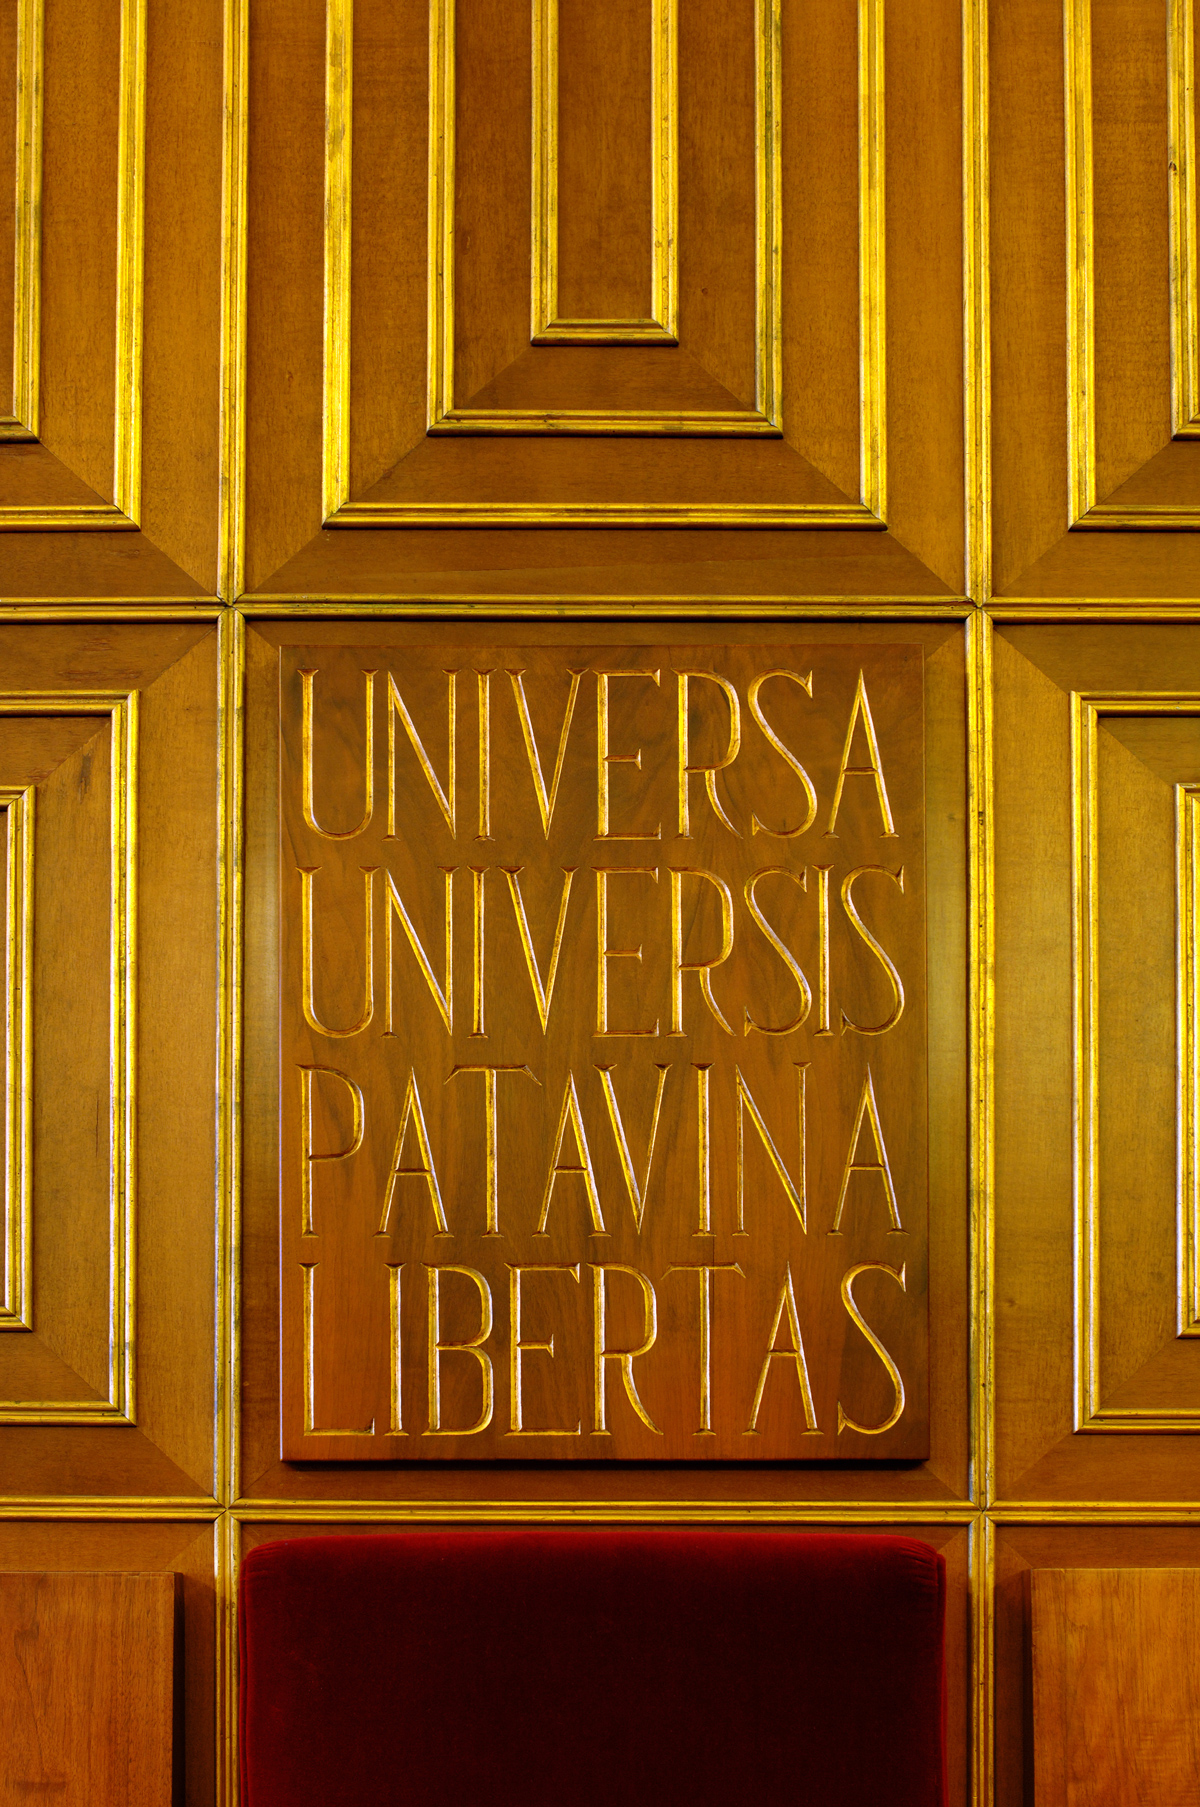 Università di Padova, Universa Universis Patavina Libertas, Aula Magna, Palazzo Bo